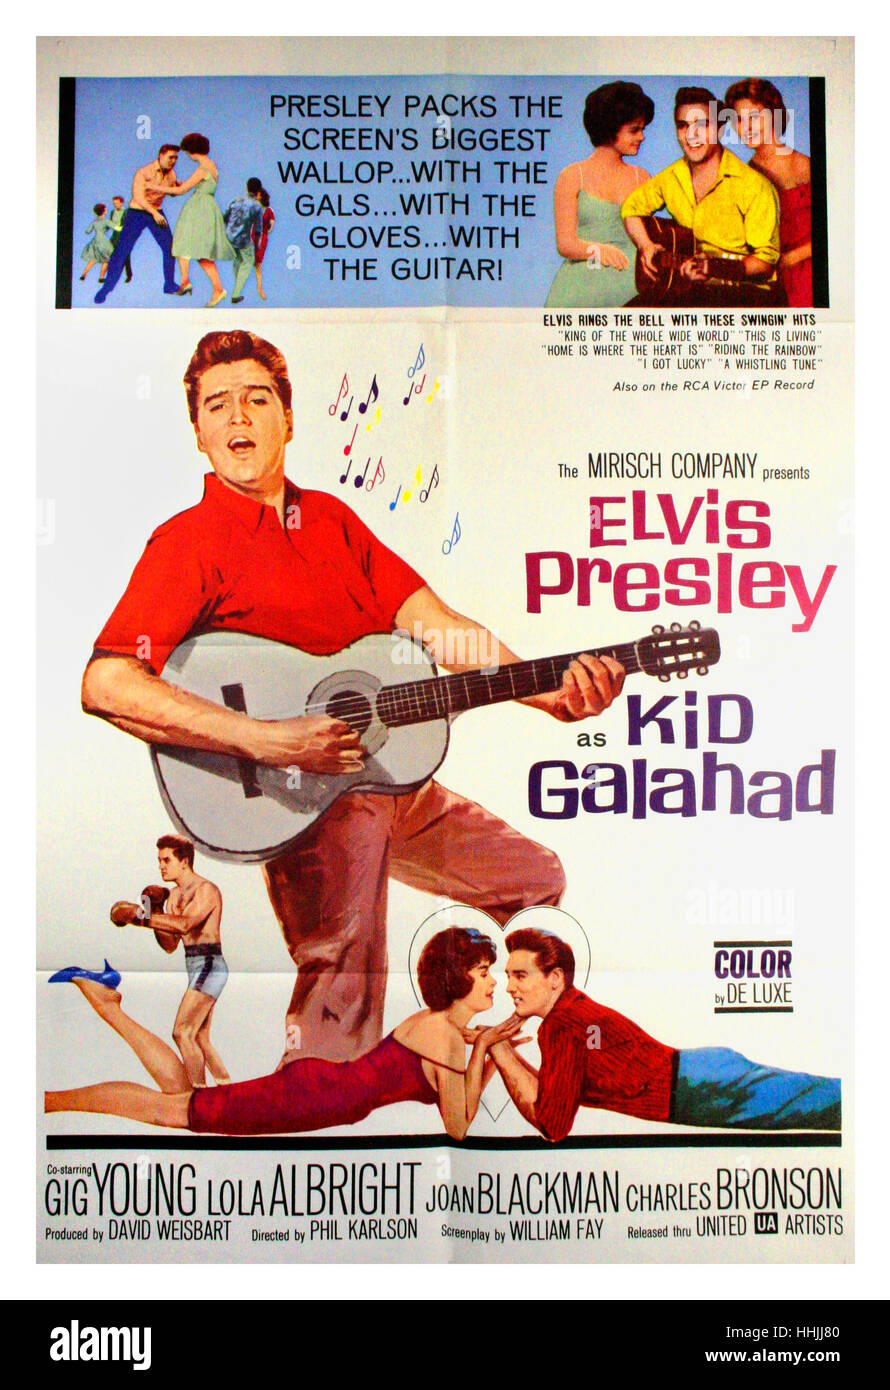 KID GALAHAD, 1962. Vintage film Cinema affiche de film avec Elvis Presley, Gig Young, Lola Albright Charles Bronson et le réalisateur Phil Karlson. Banque D'Images